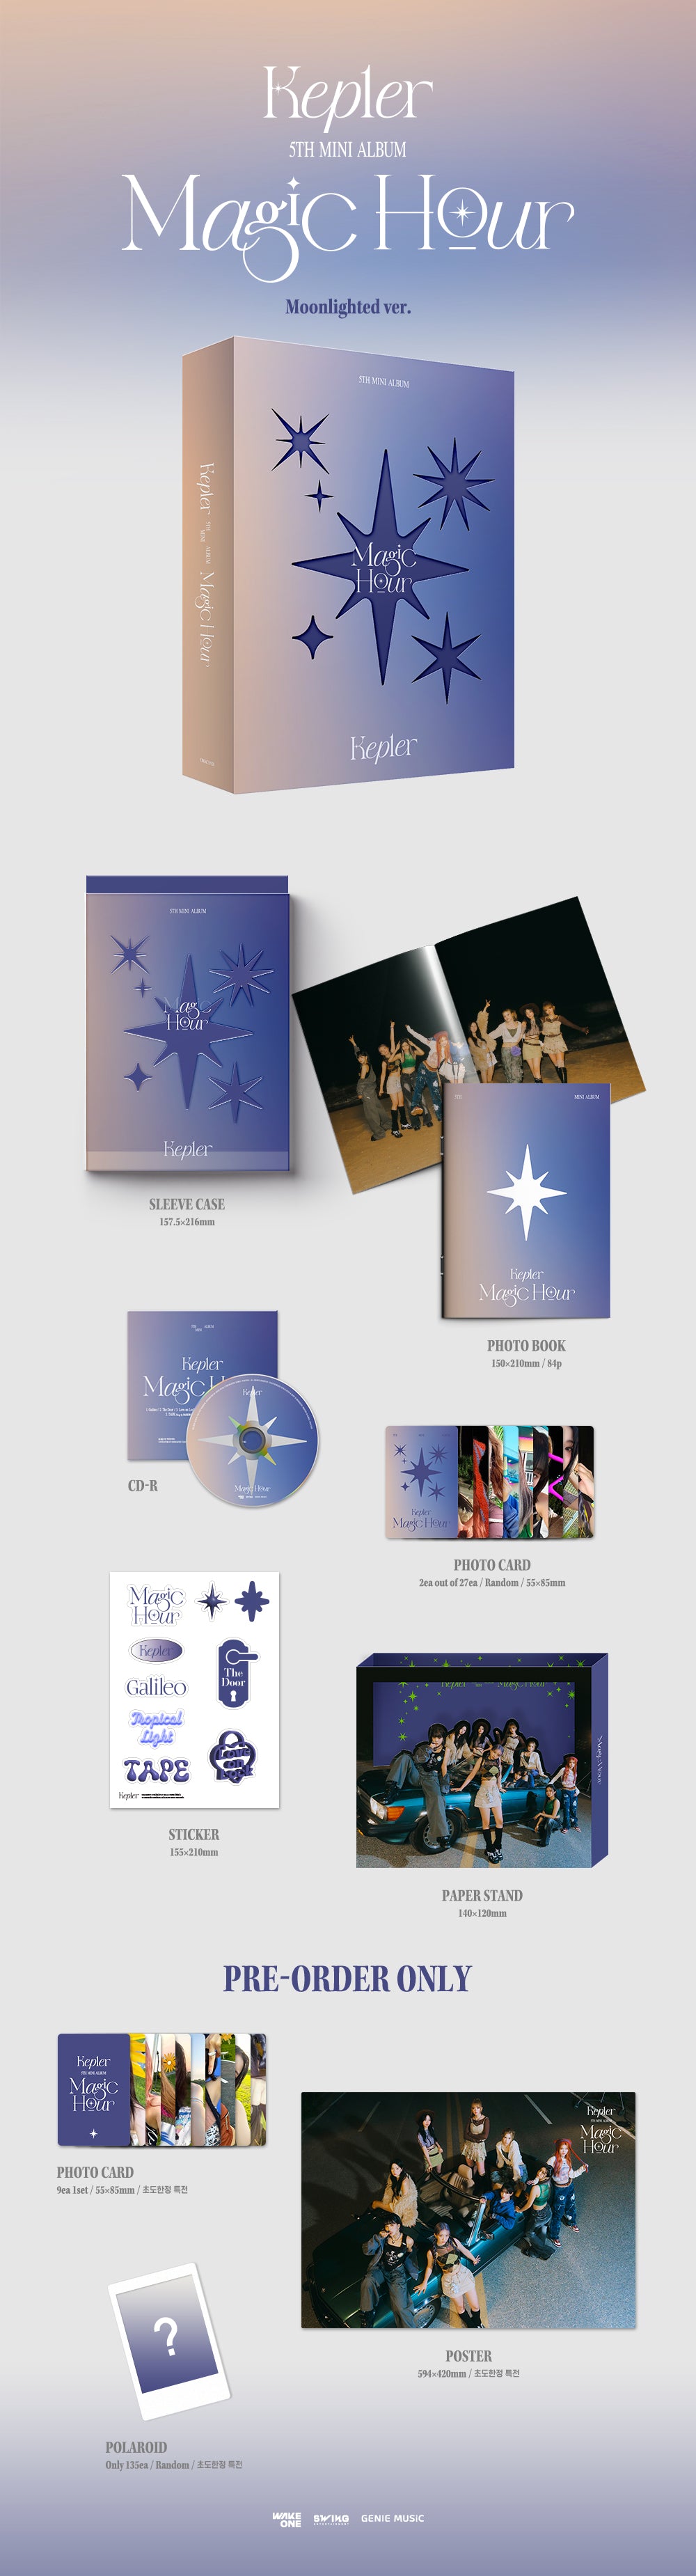 K-Pop CD Kep1er - 5th Mini Album 'Magic Hour'